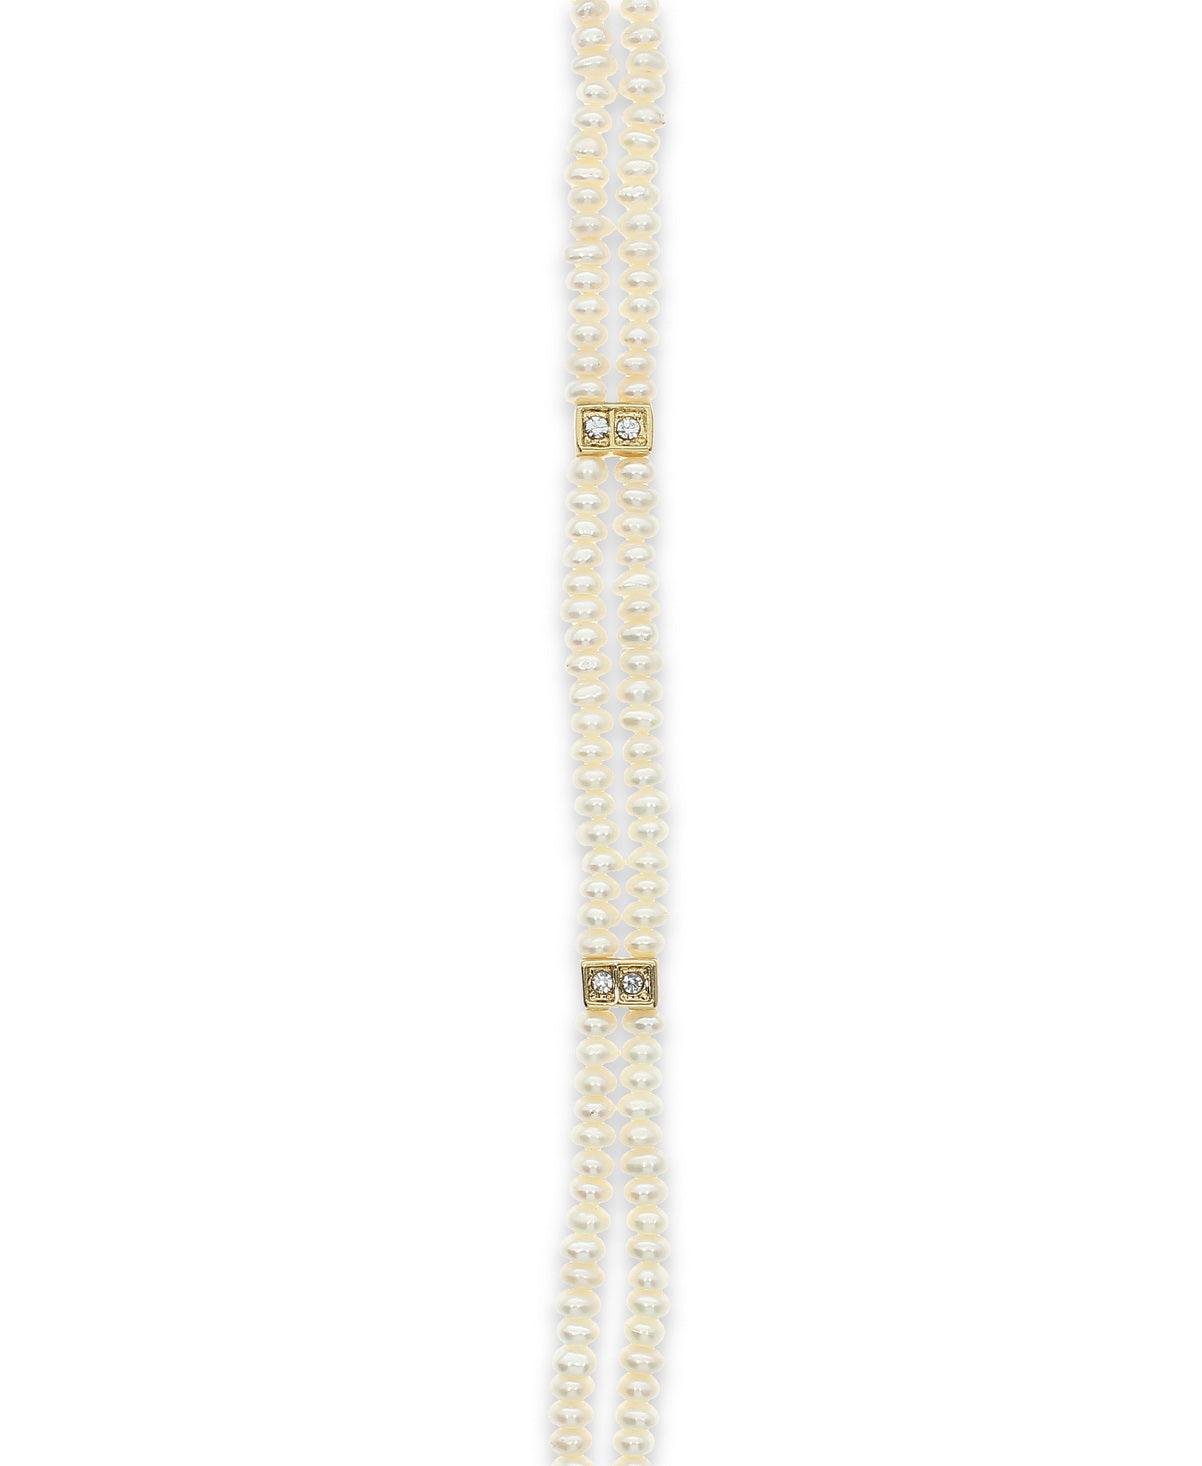 Fashionable Pearl Bracelet - Chandrani Pearls